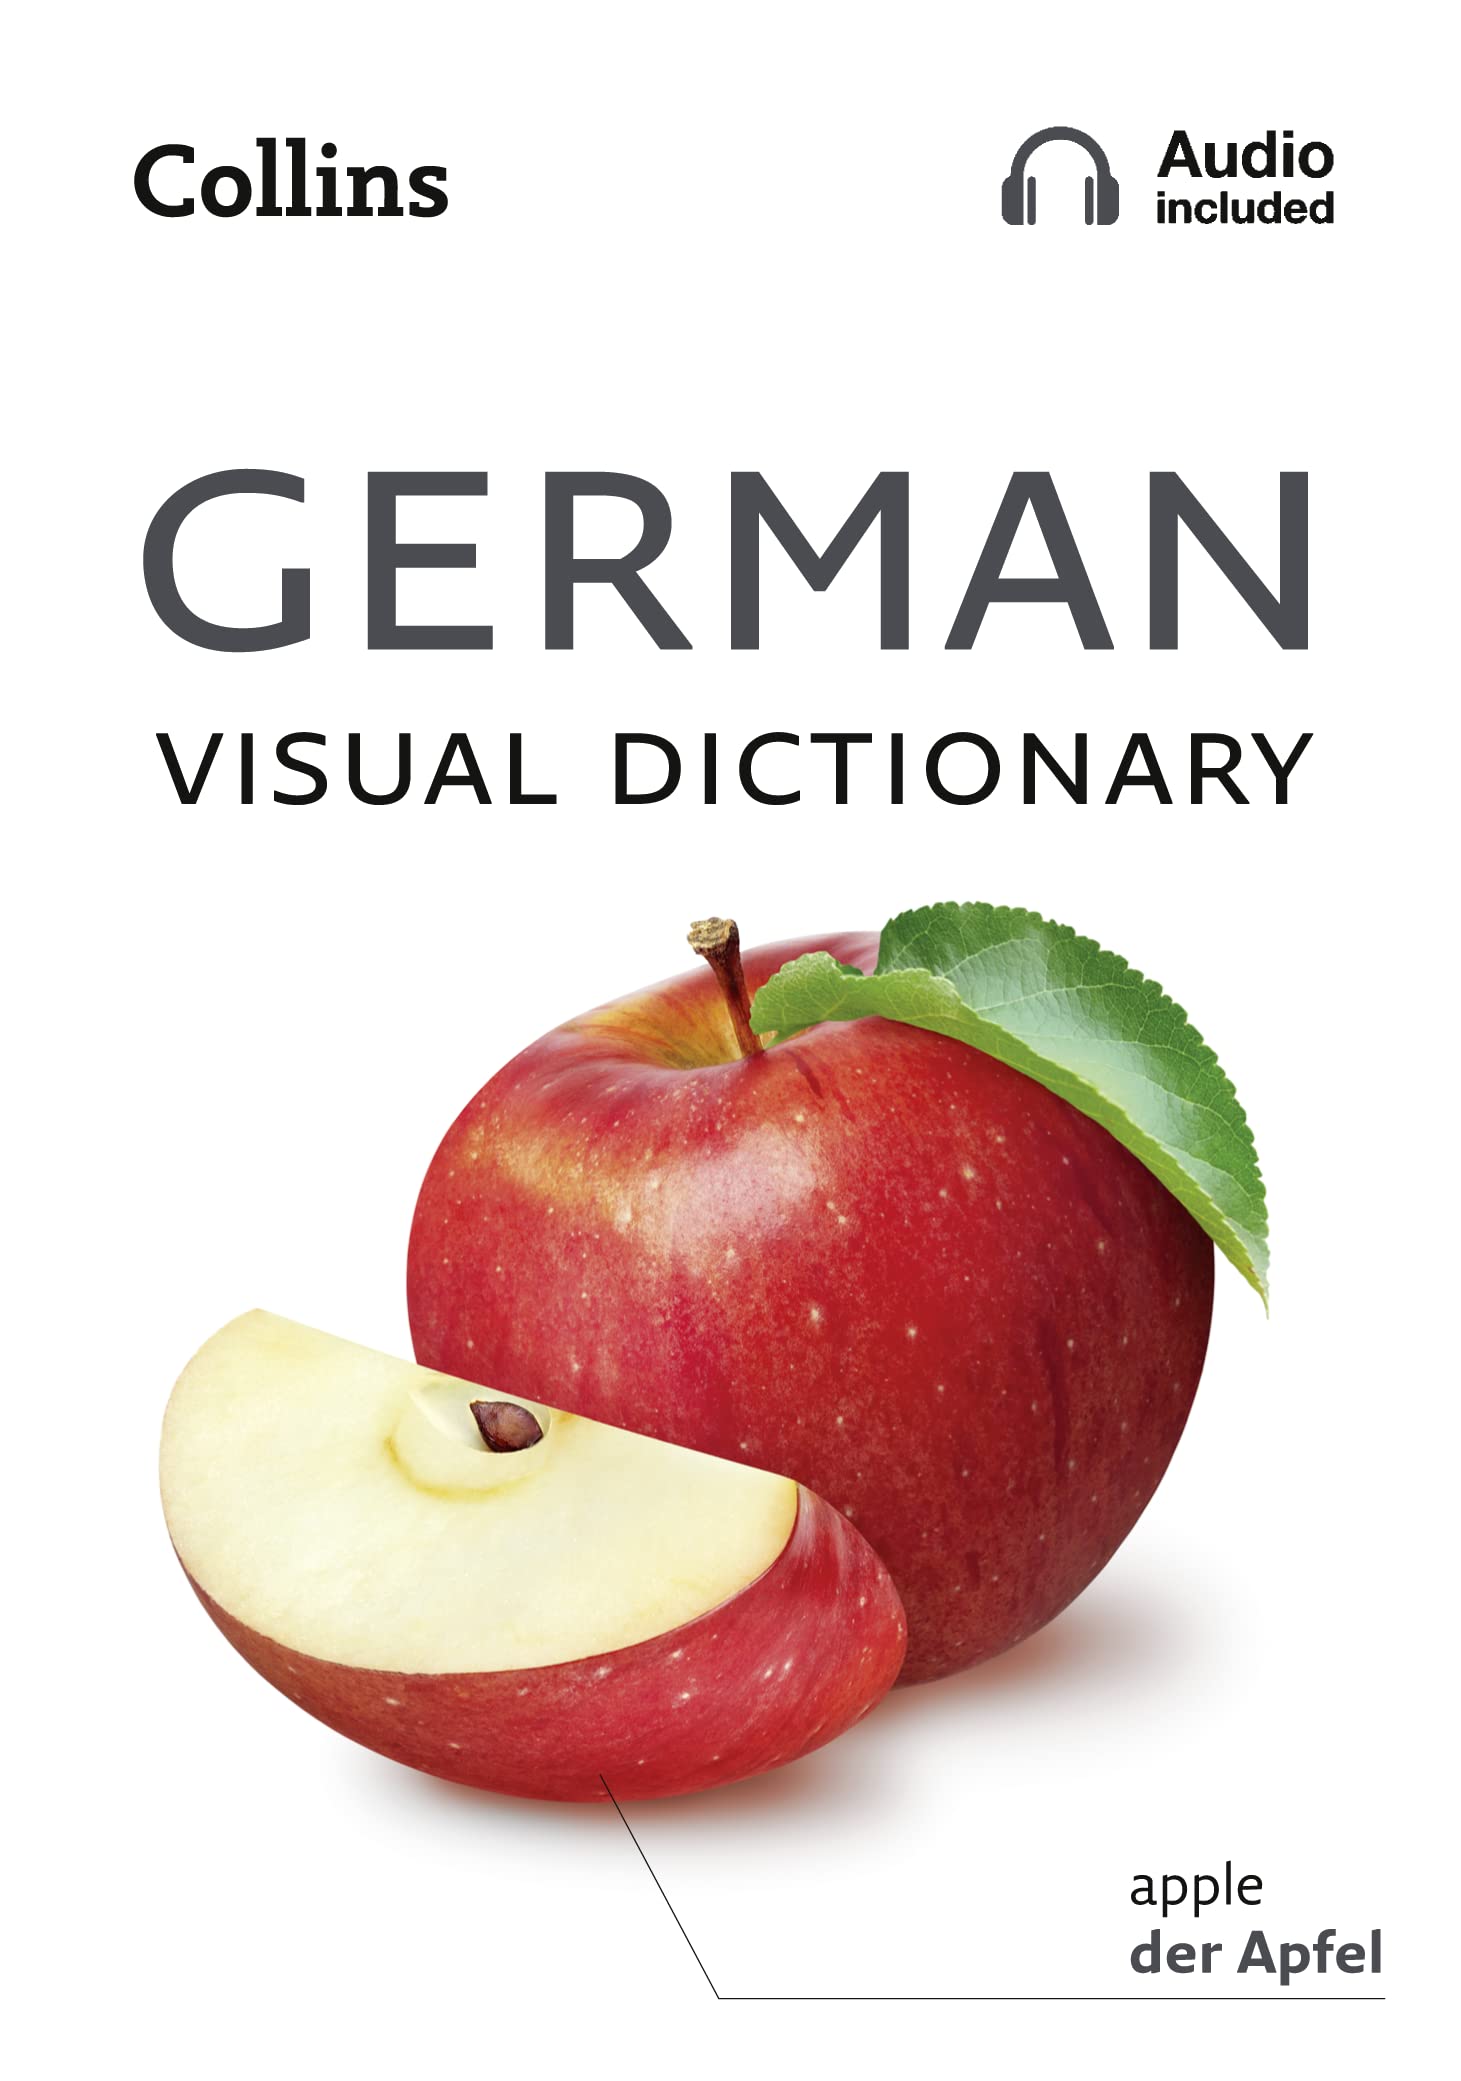 Collins Visual Dictionary: German